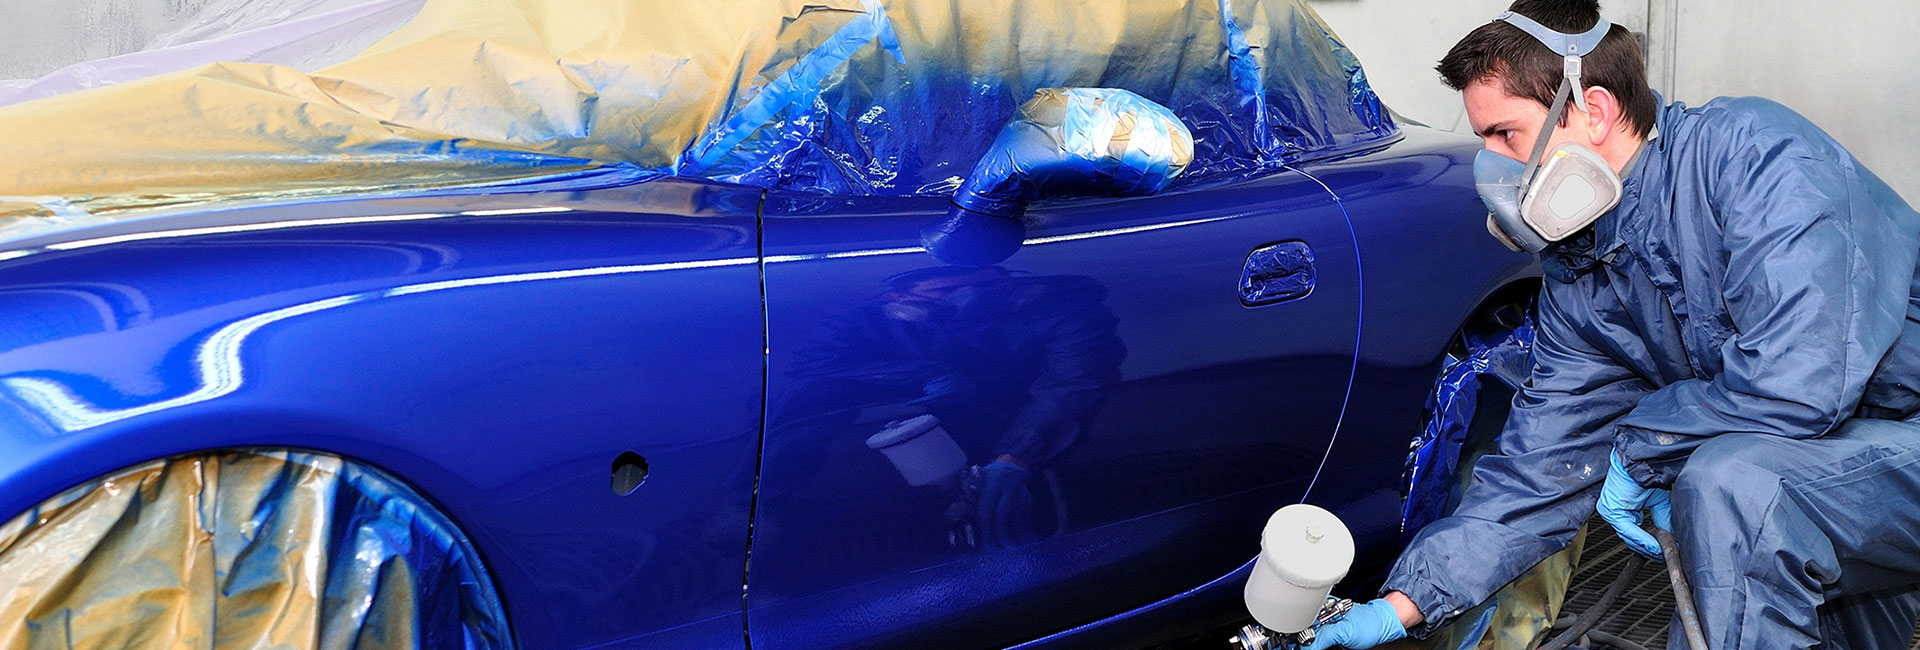 Mobile Car Spray Painting Repair Scratch Dent Repairs Jh Car Spray Painting